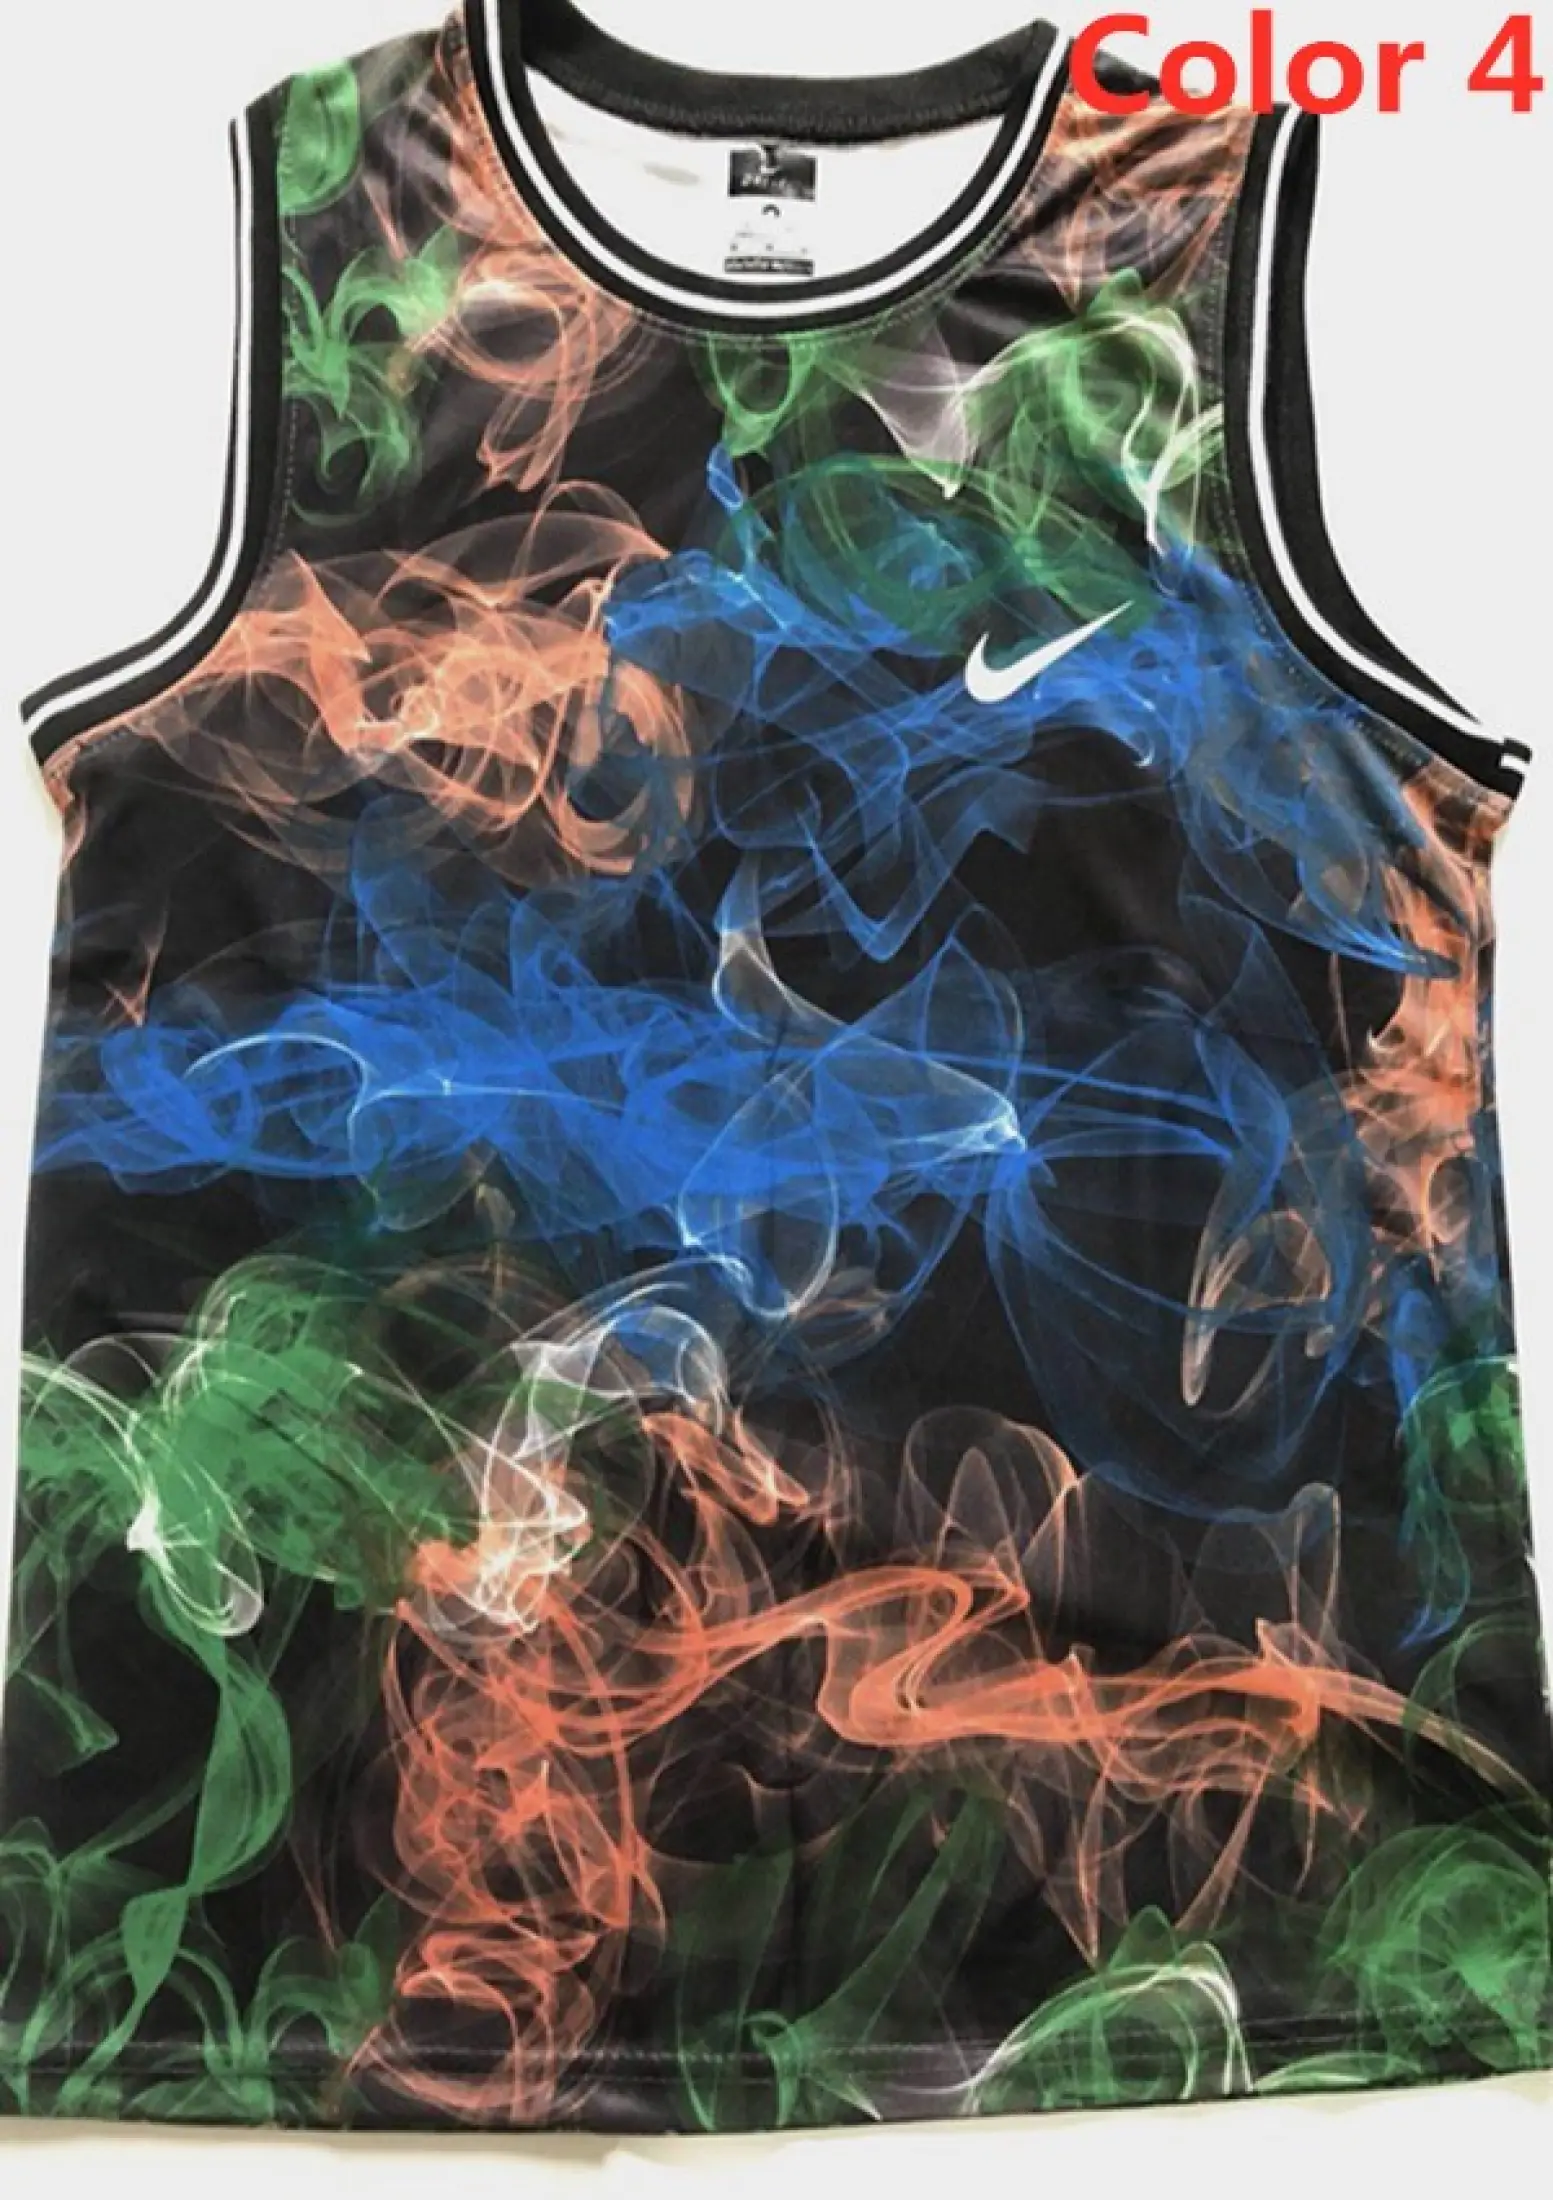 Cod Dri Fit Vest Men Clothing Women Sports Camo Smoke Icon Nike Vests Crew Neck For Gift Lazada Ph